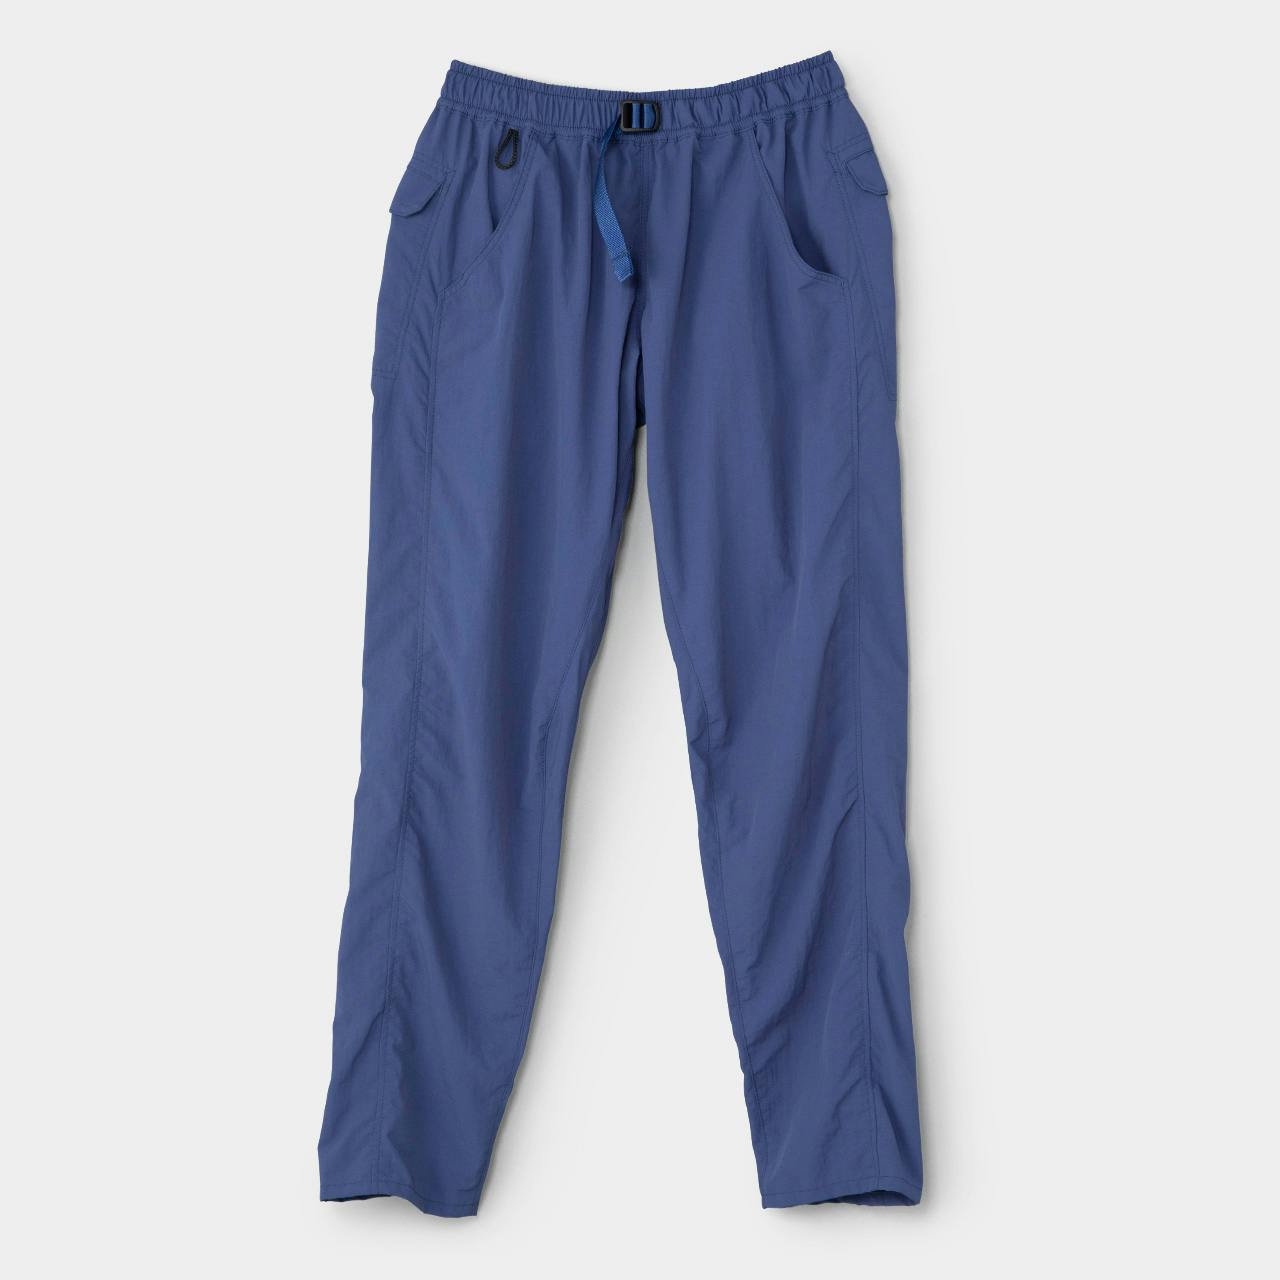 5-Pocket Pants (Men)<br>4/17(月)18:00<br>オンラインショップに再入荷<br>山と道パンツシリーズのオリジン